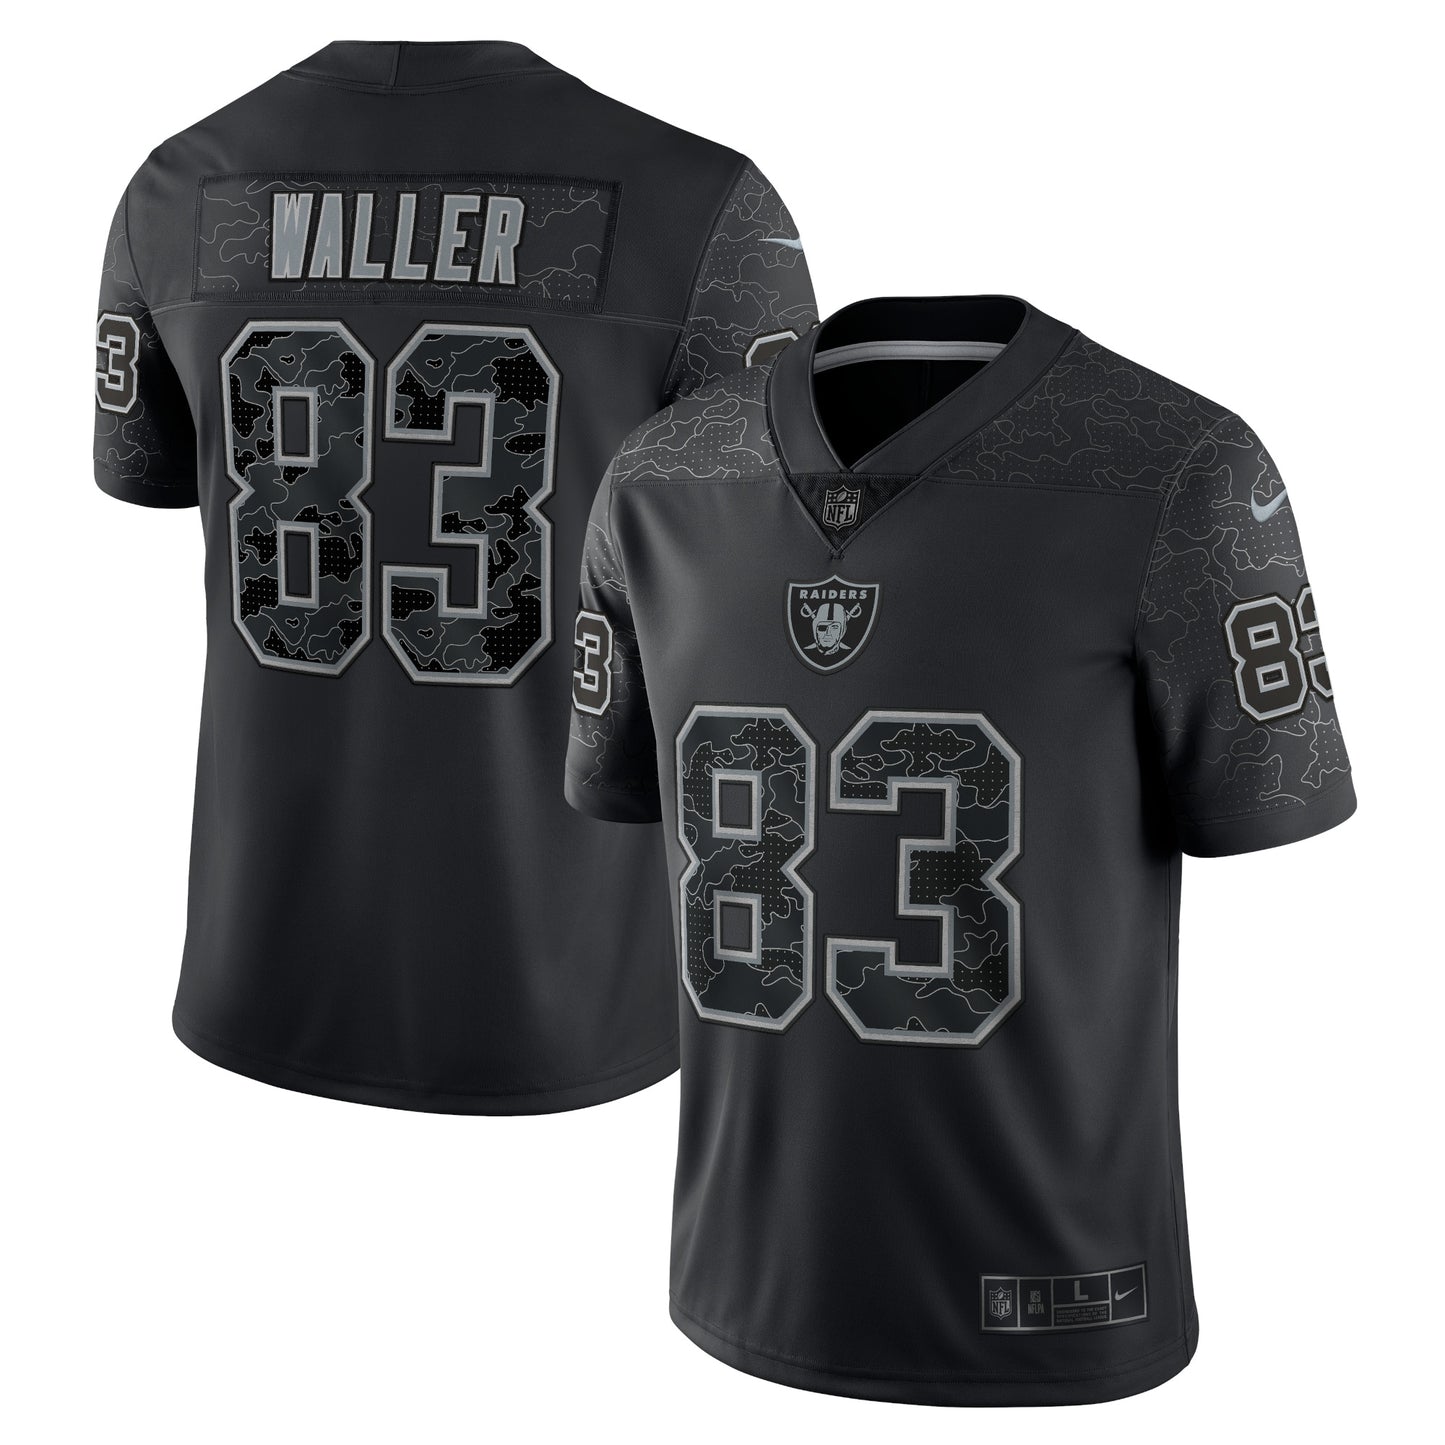 Darren Waller Las Vegas Raiders Nike RFLCTV Limited Jersey - Black